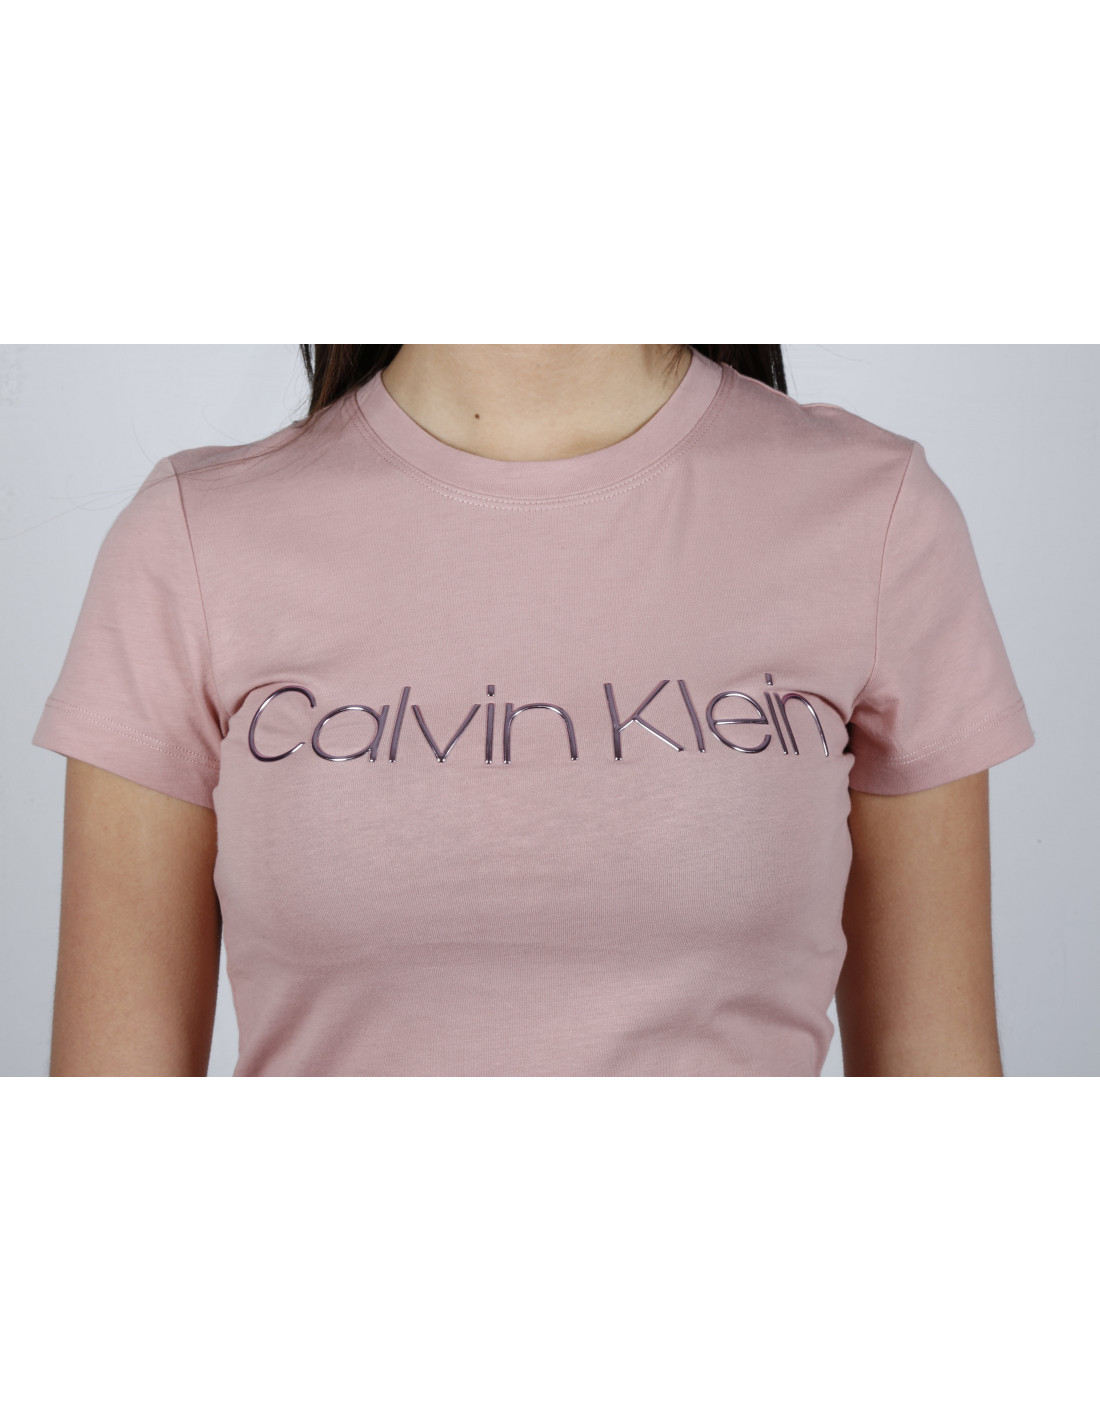 Calvin Klein slim fit women\'s pink t-shirt with logo Taglia XXS Color Pink